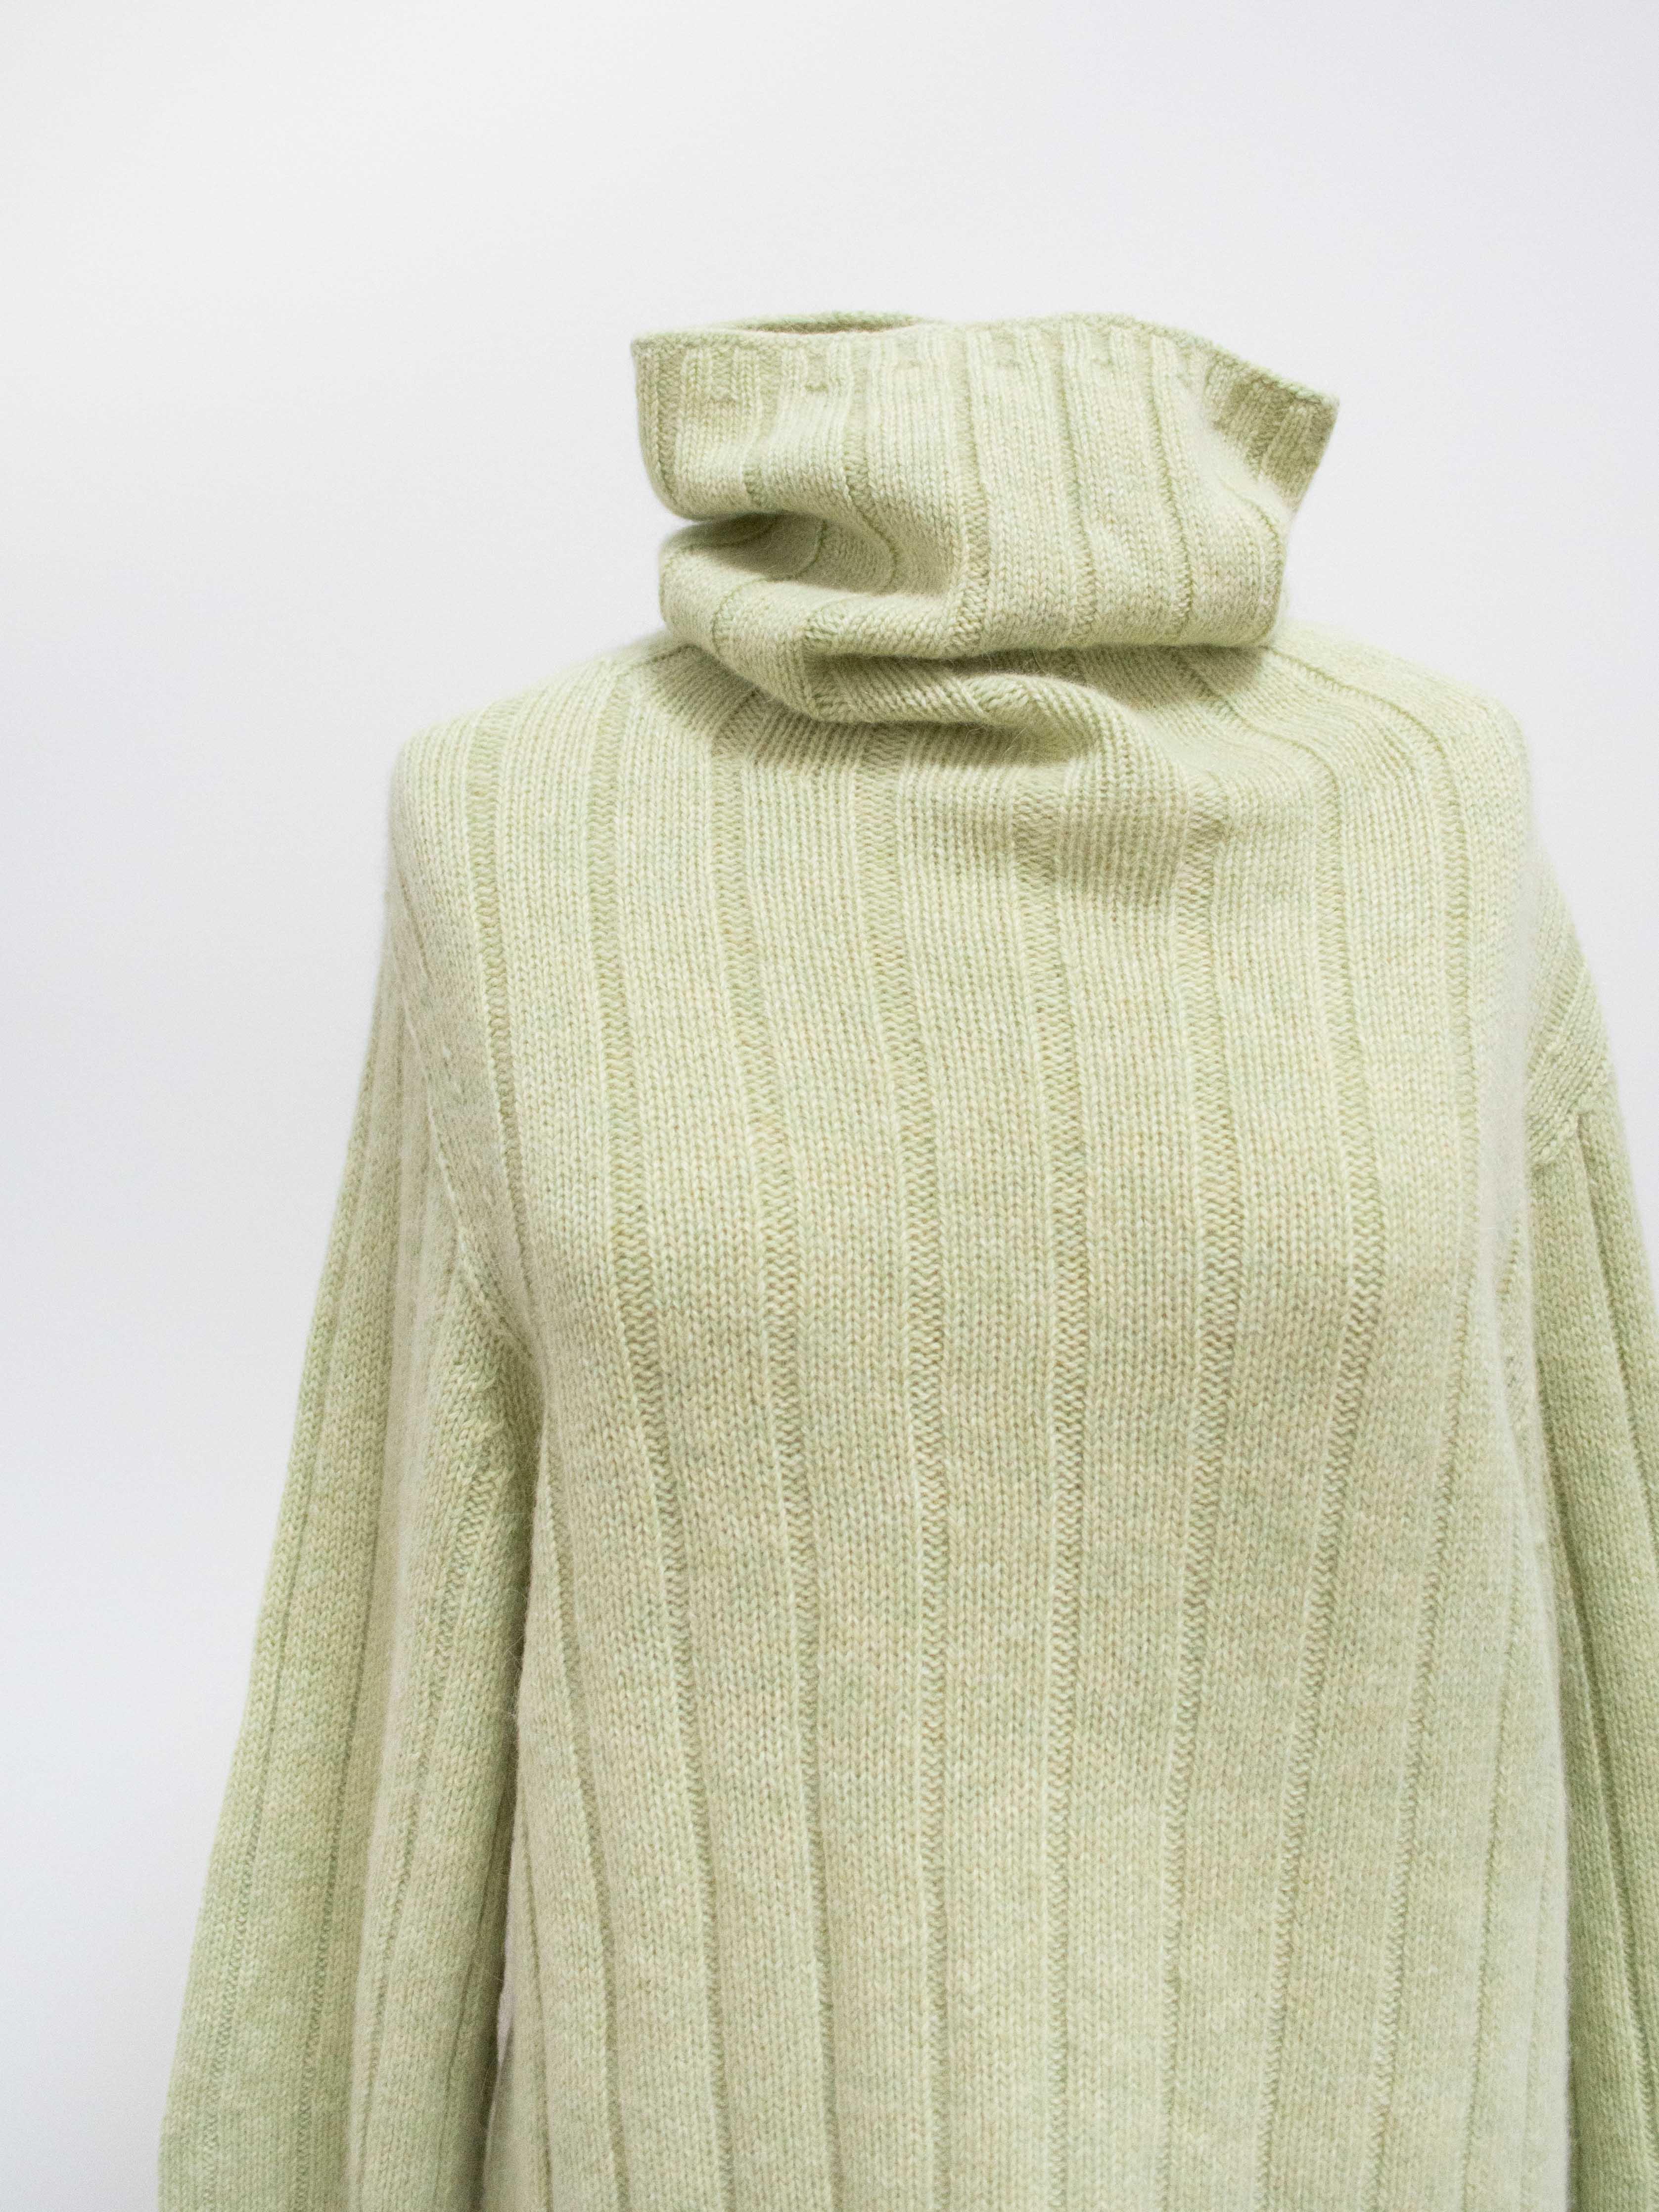 Namu Shop - Unfil Royal Baby Alpaca Chunky Turtleneck Sweater - Light Green